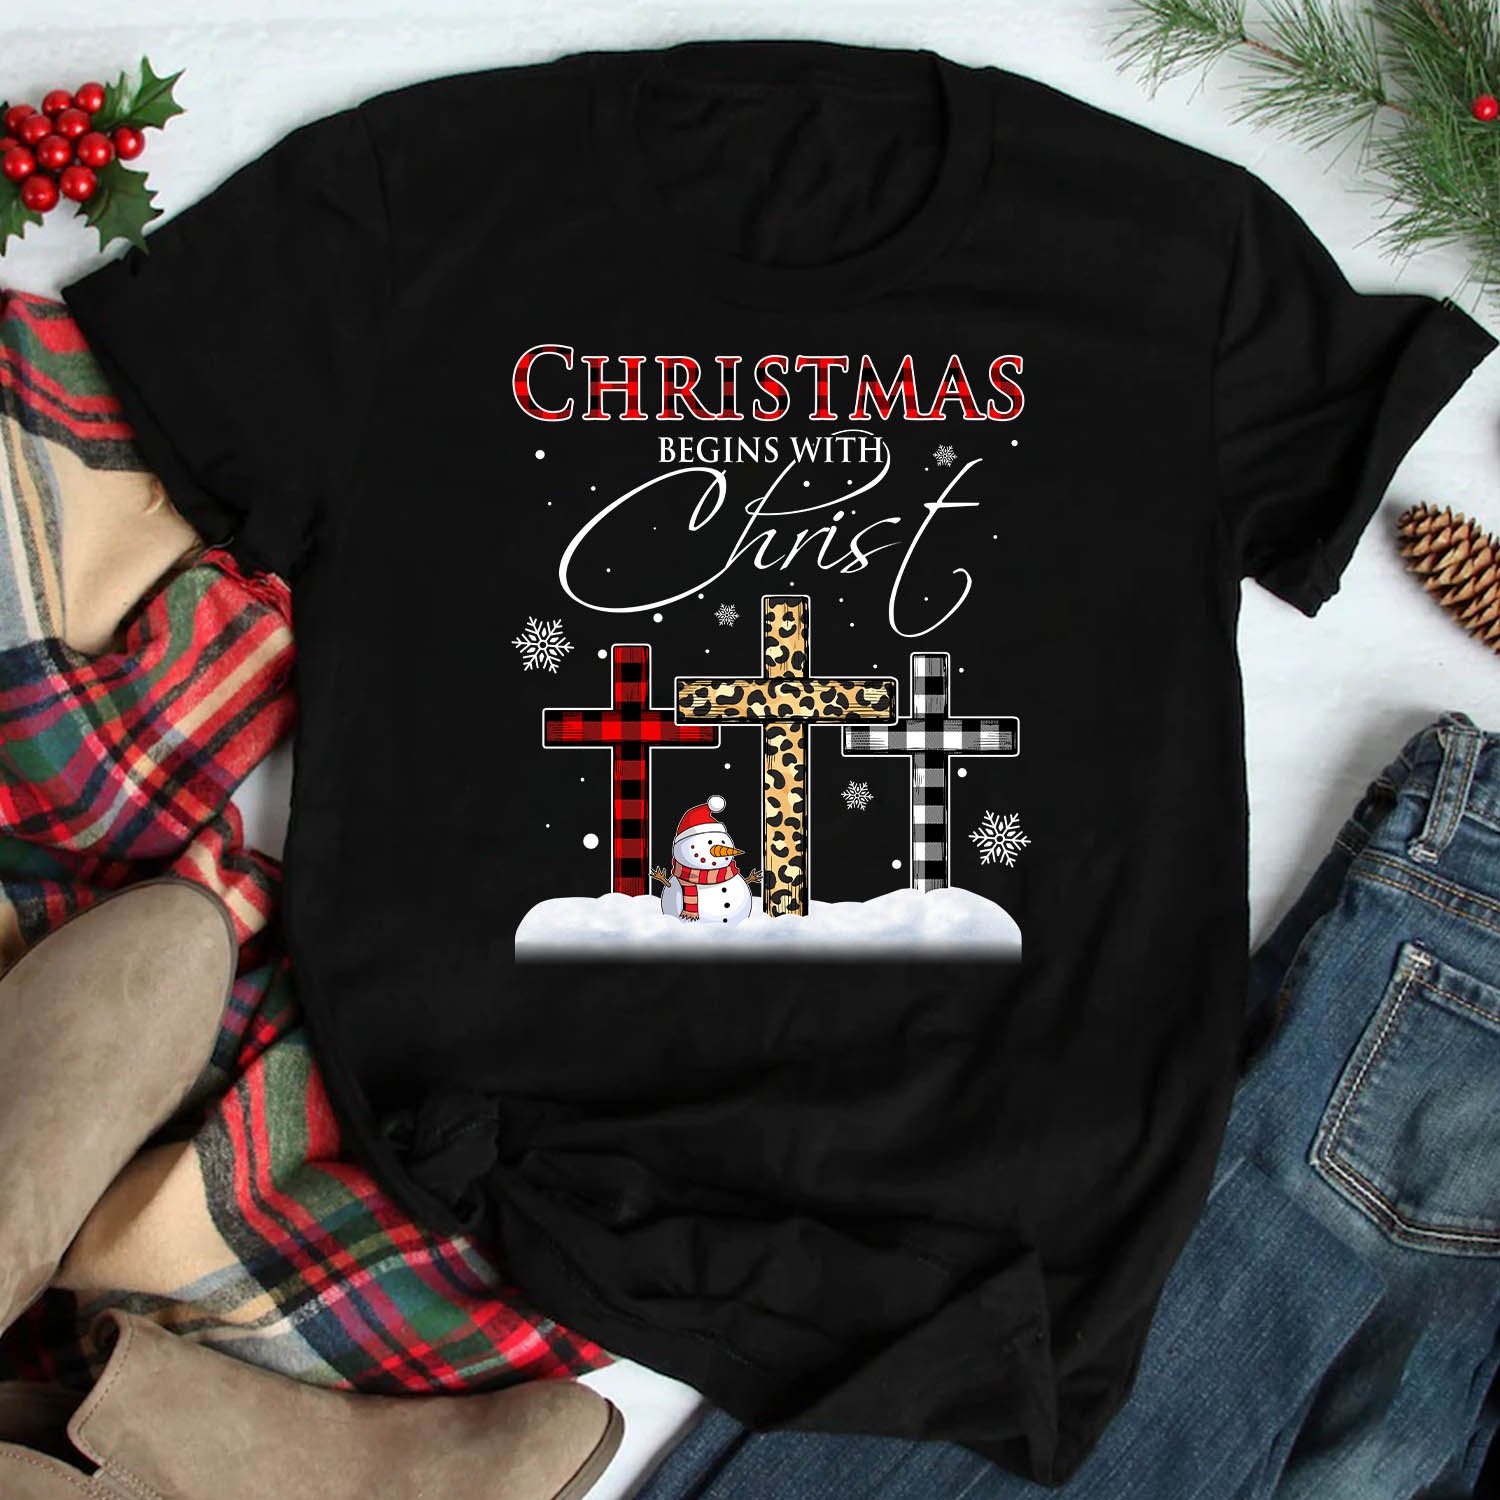 Jesus – Cross – Christmas begins with Christ – Apparel – Pixorcenter